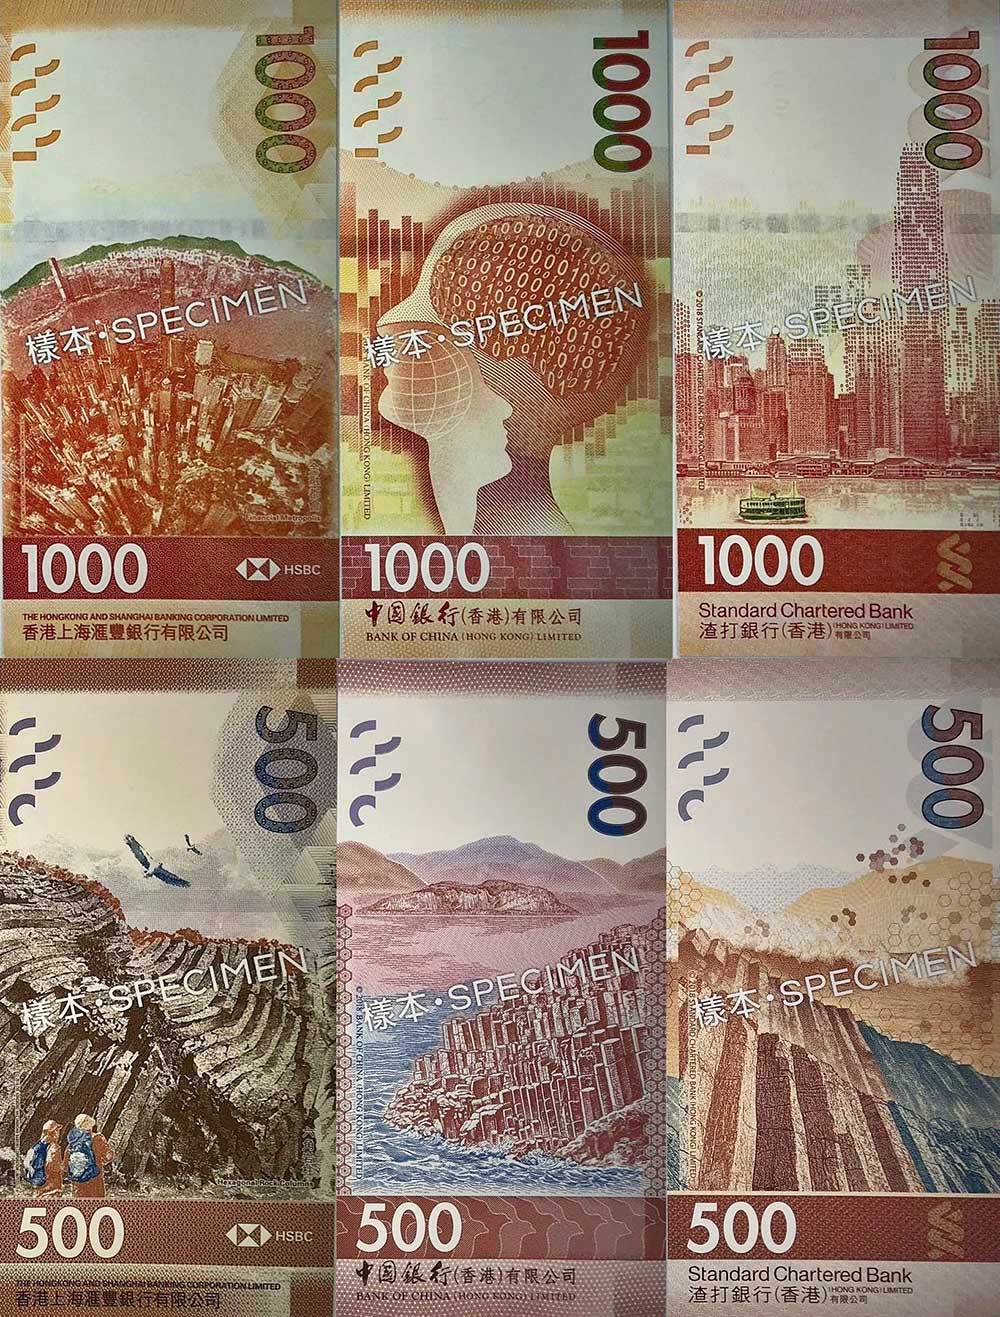 New Hong Kong Banknote Designs Unveiled